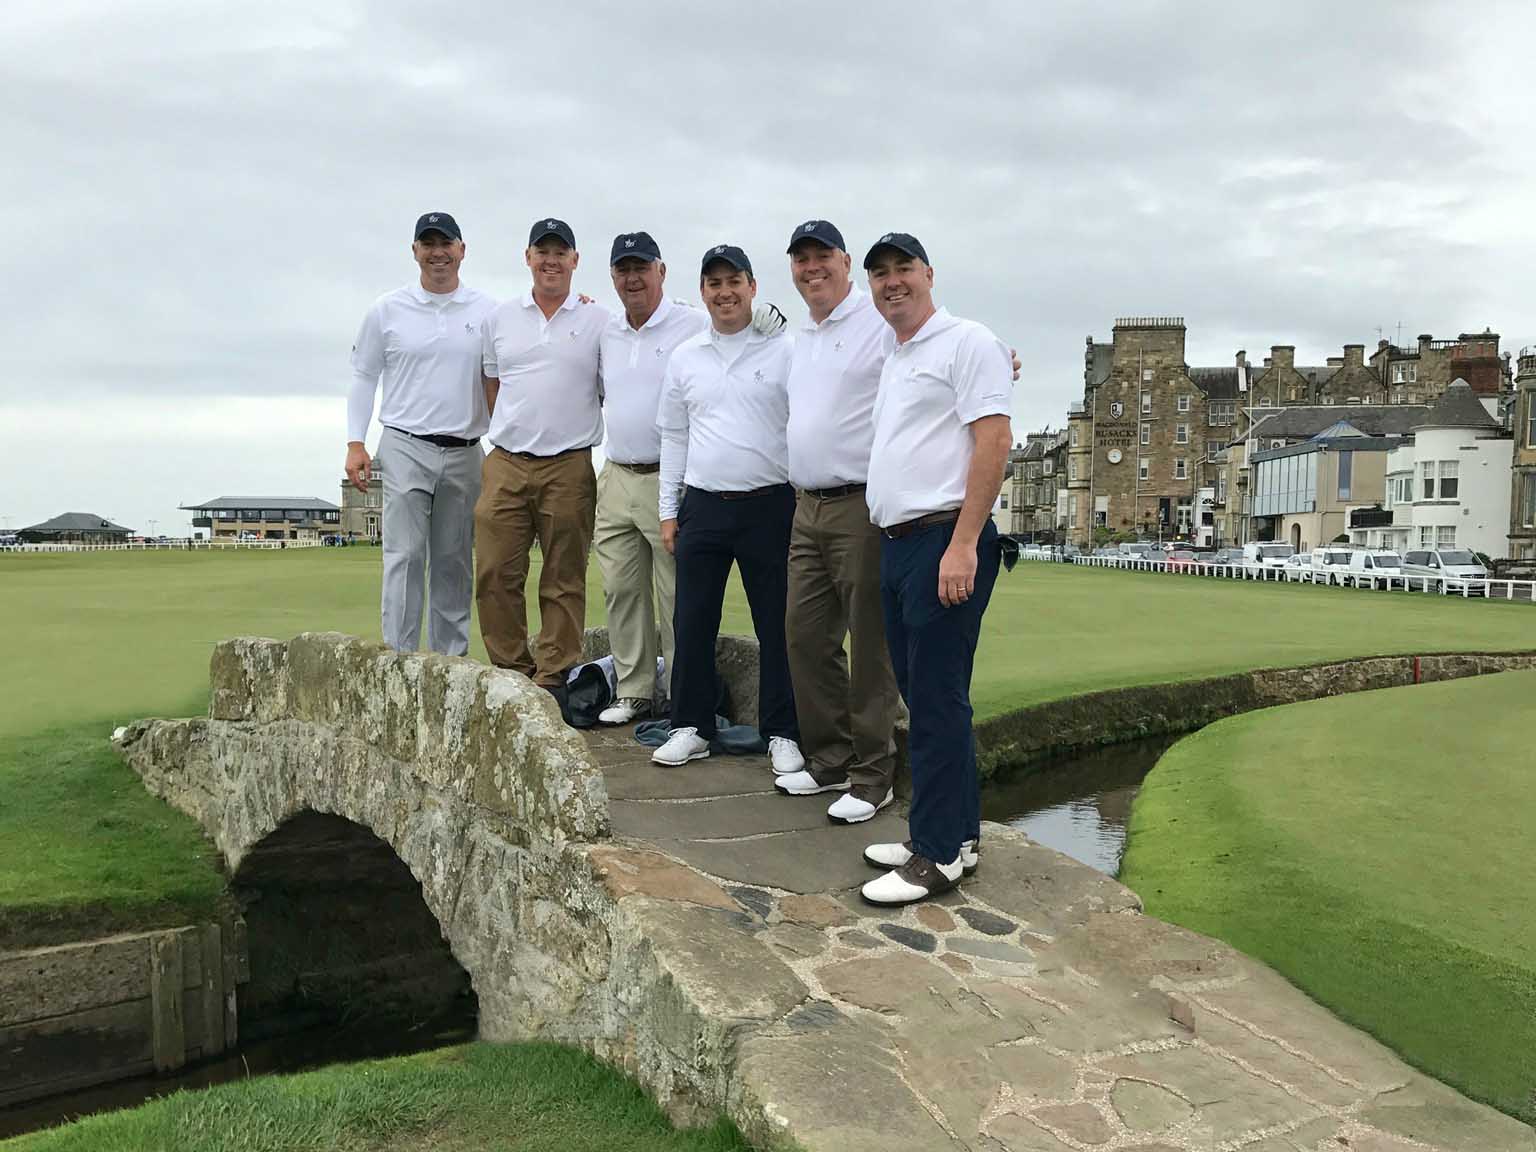 Family Golf Trip to Scotland